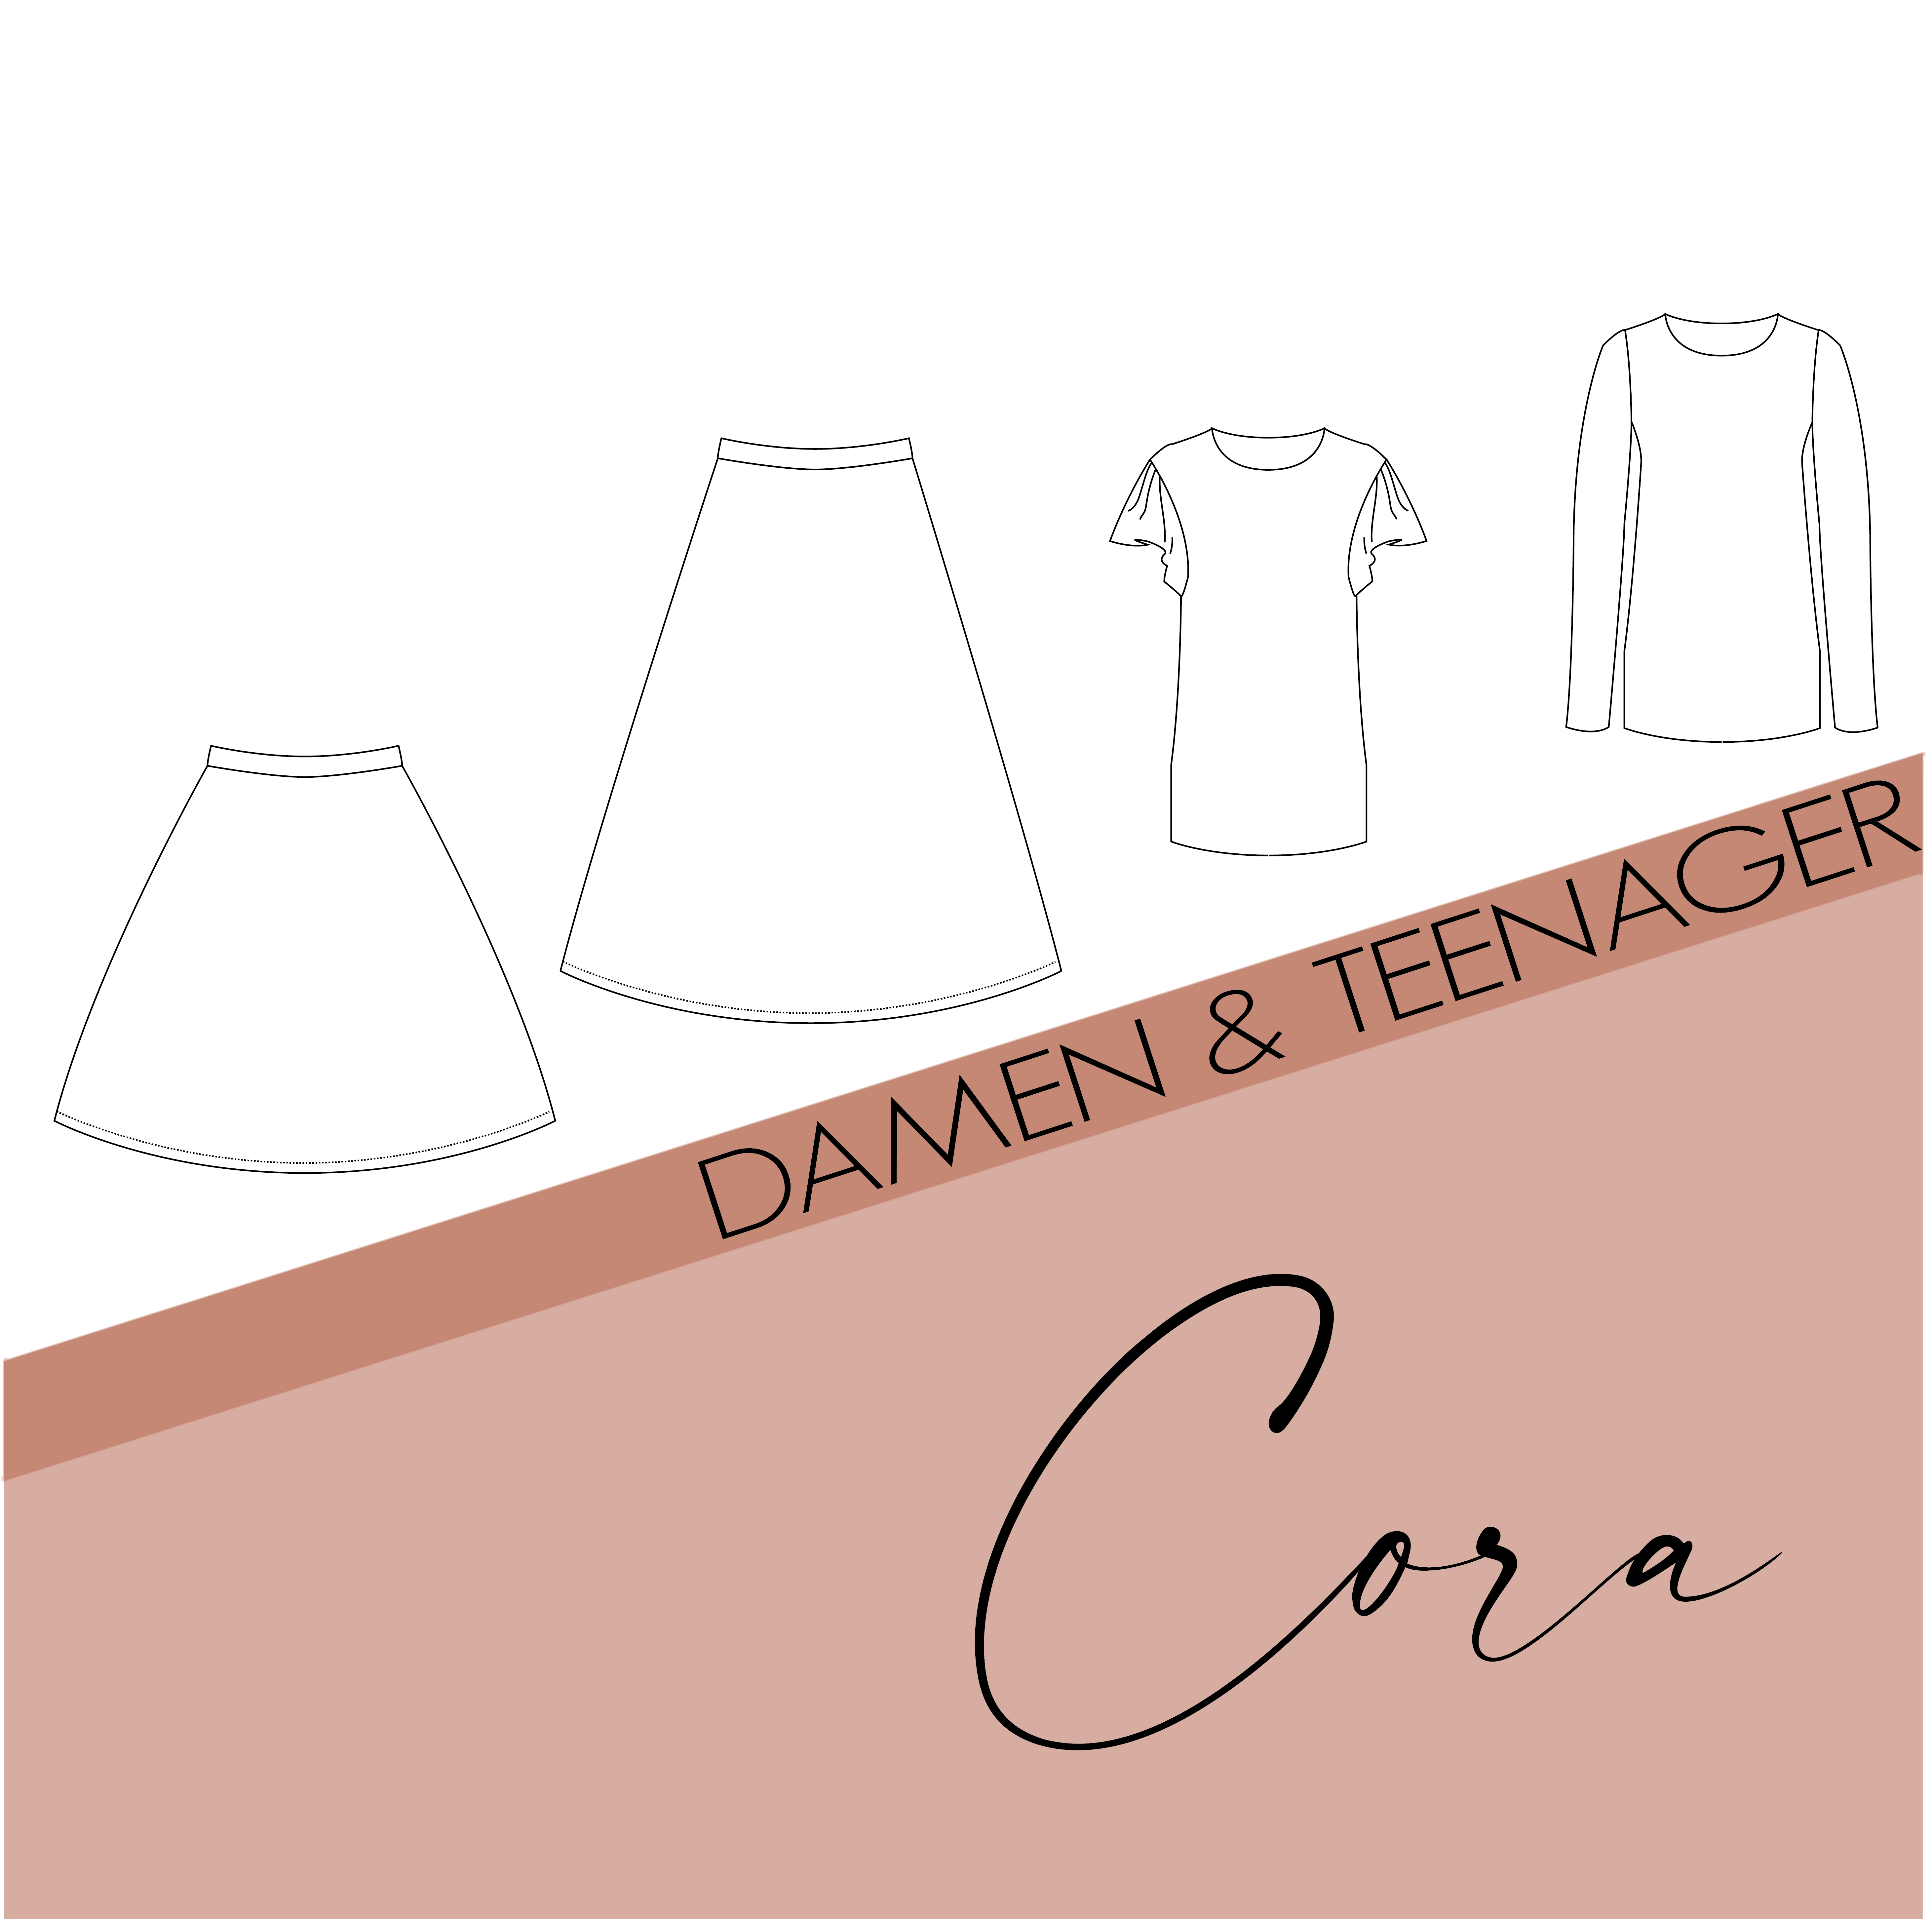 Cora - Damen & Teenager